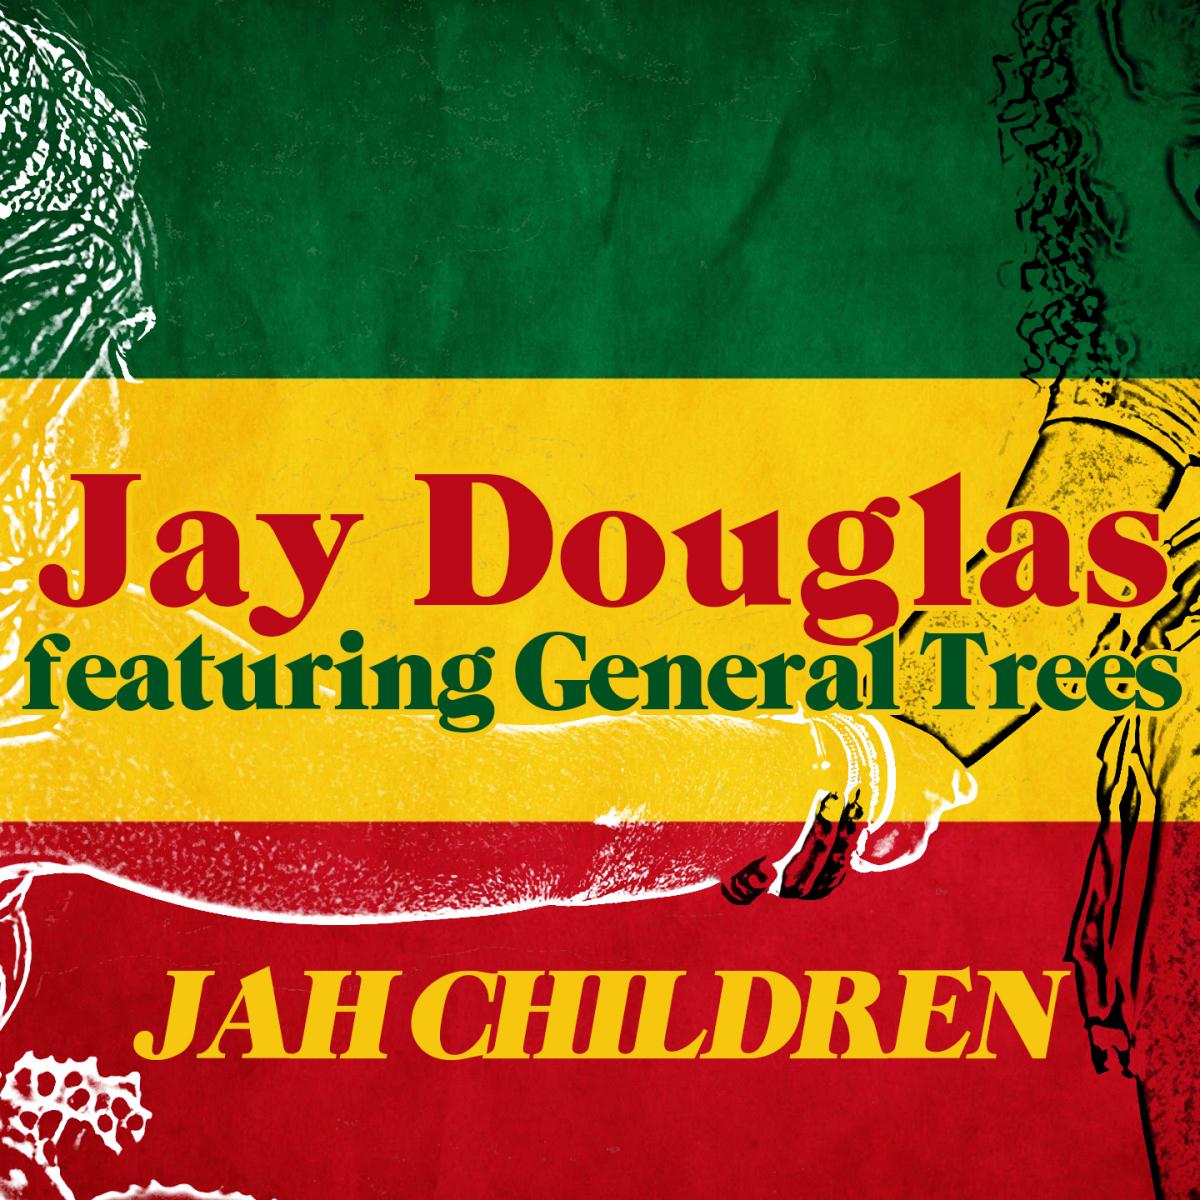 JUNO Award-Nominated & Award-Winning Reggae Master Jay Douglas Drops “Jah Children”